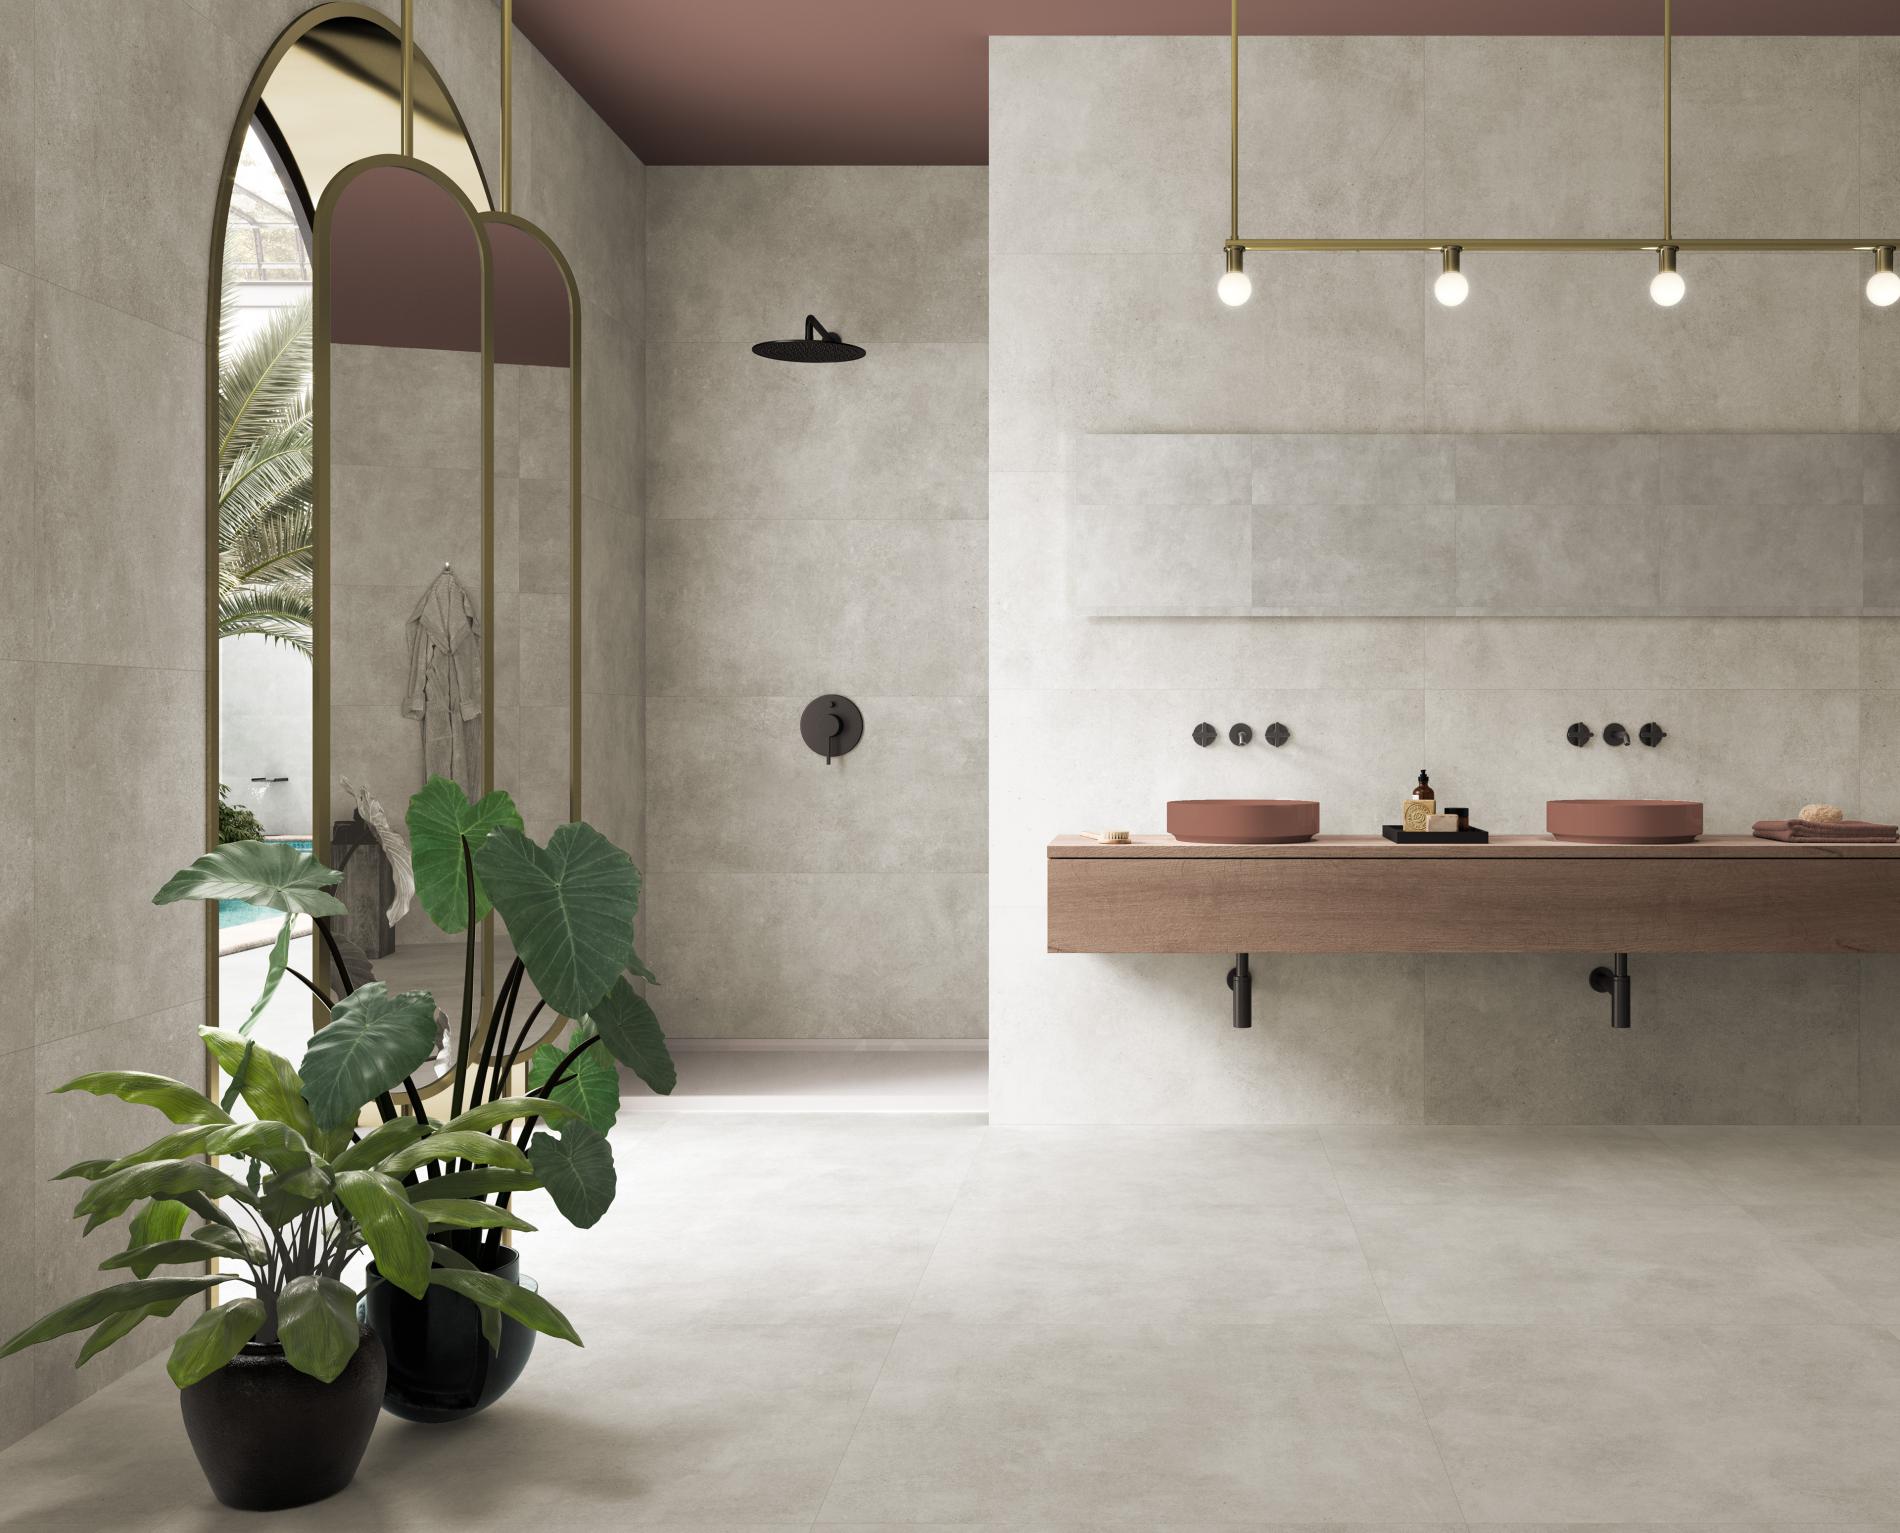 manhattan concrete floor tiles , concrete effect , bathroom , pink sink bowls